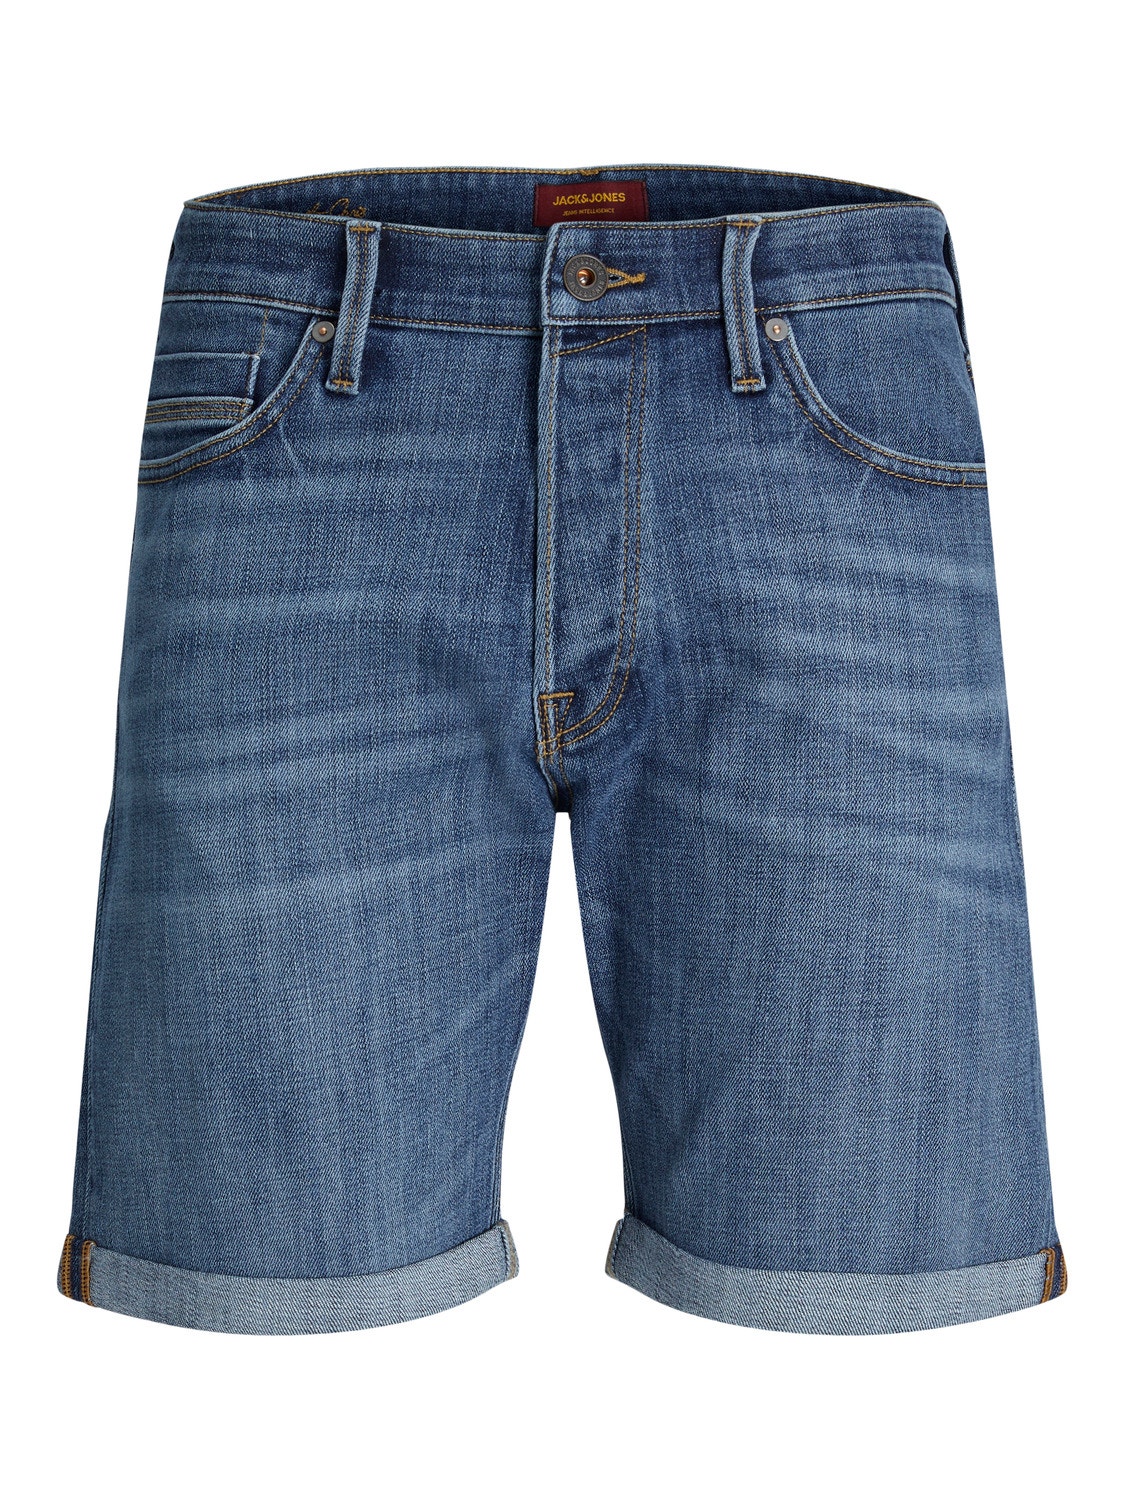 Jack & Jones Relaxed Fit Jeans Shorts -Blue Denim - 12249092